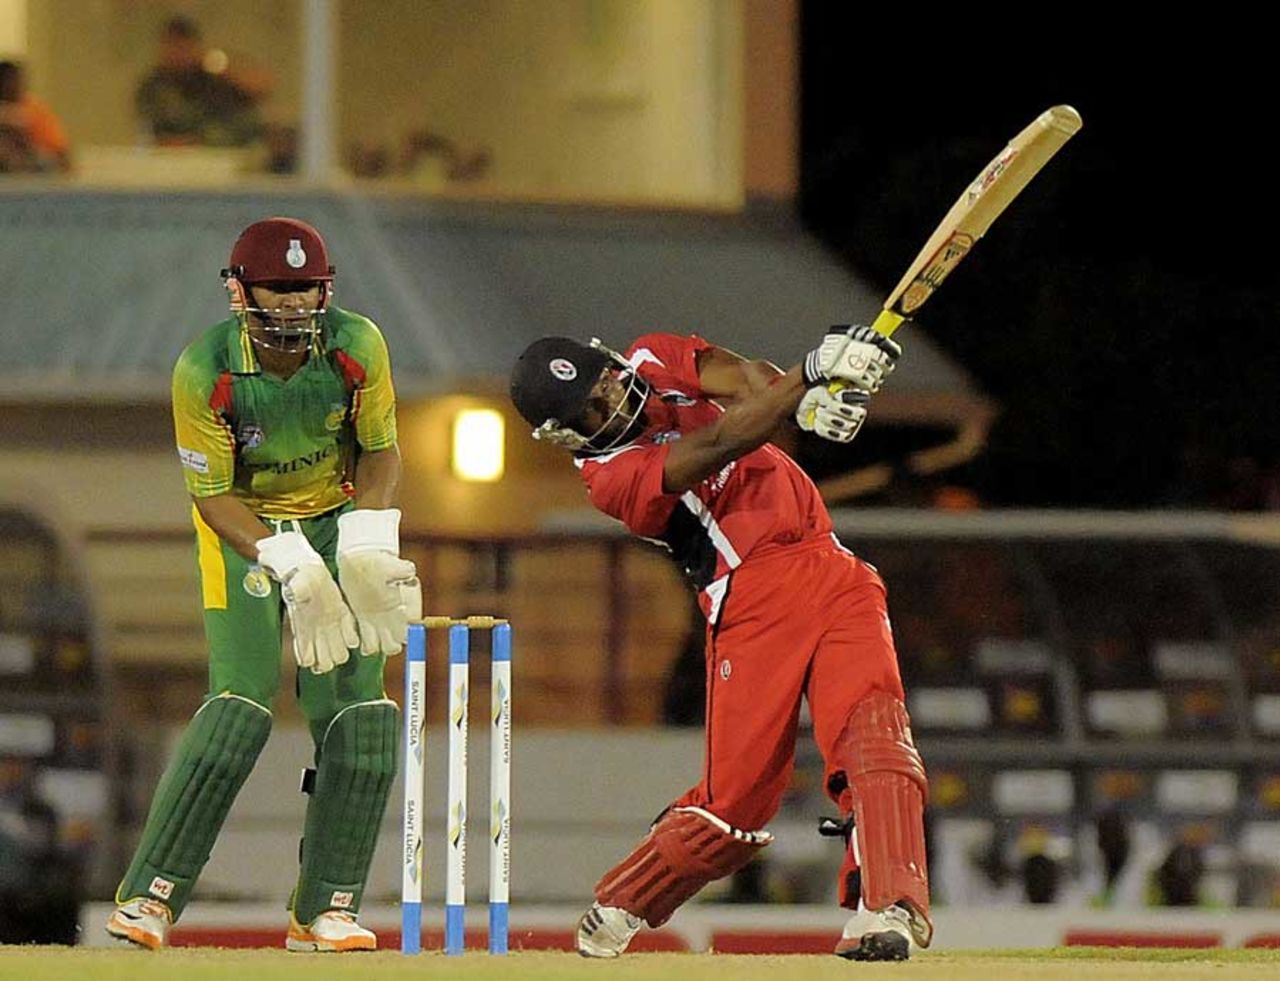 Dwayne Bravo launches into one, Windward Islands v Trinidad and Tobago, Caribbean T20, January 15, 2013